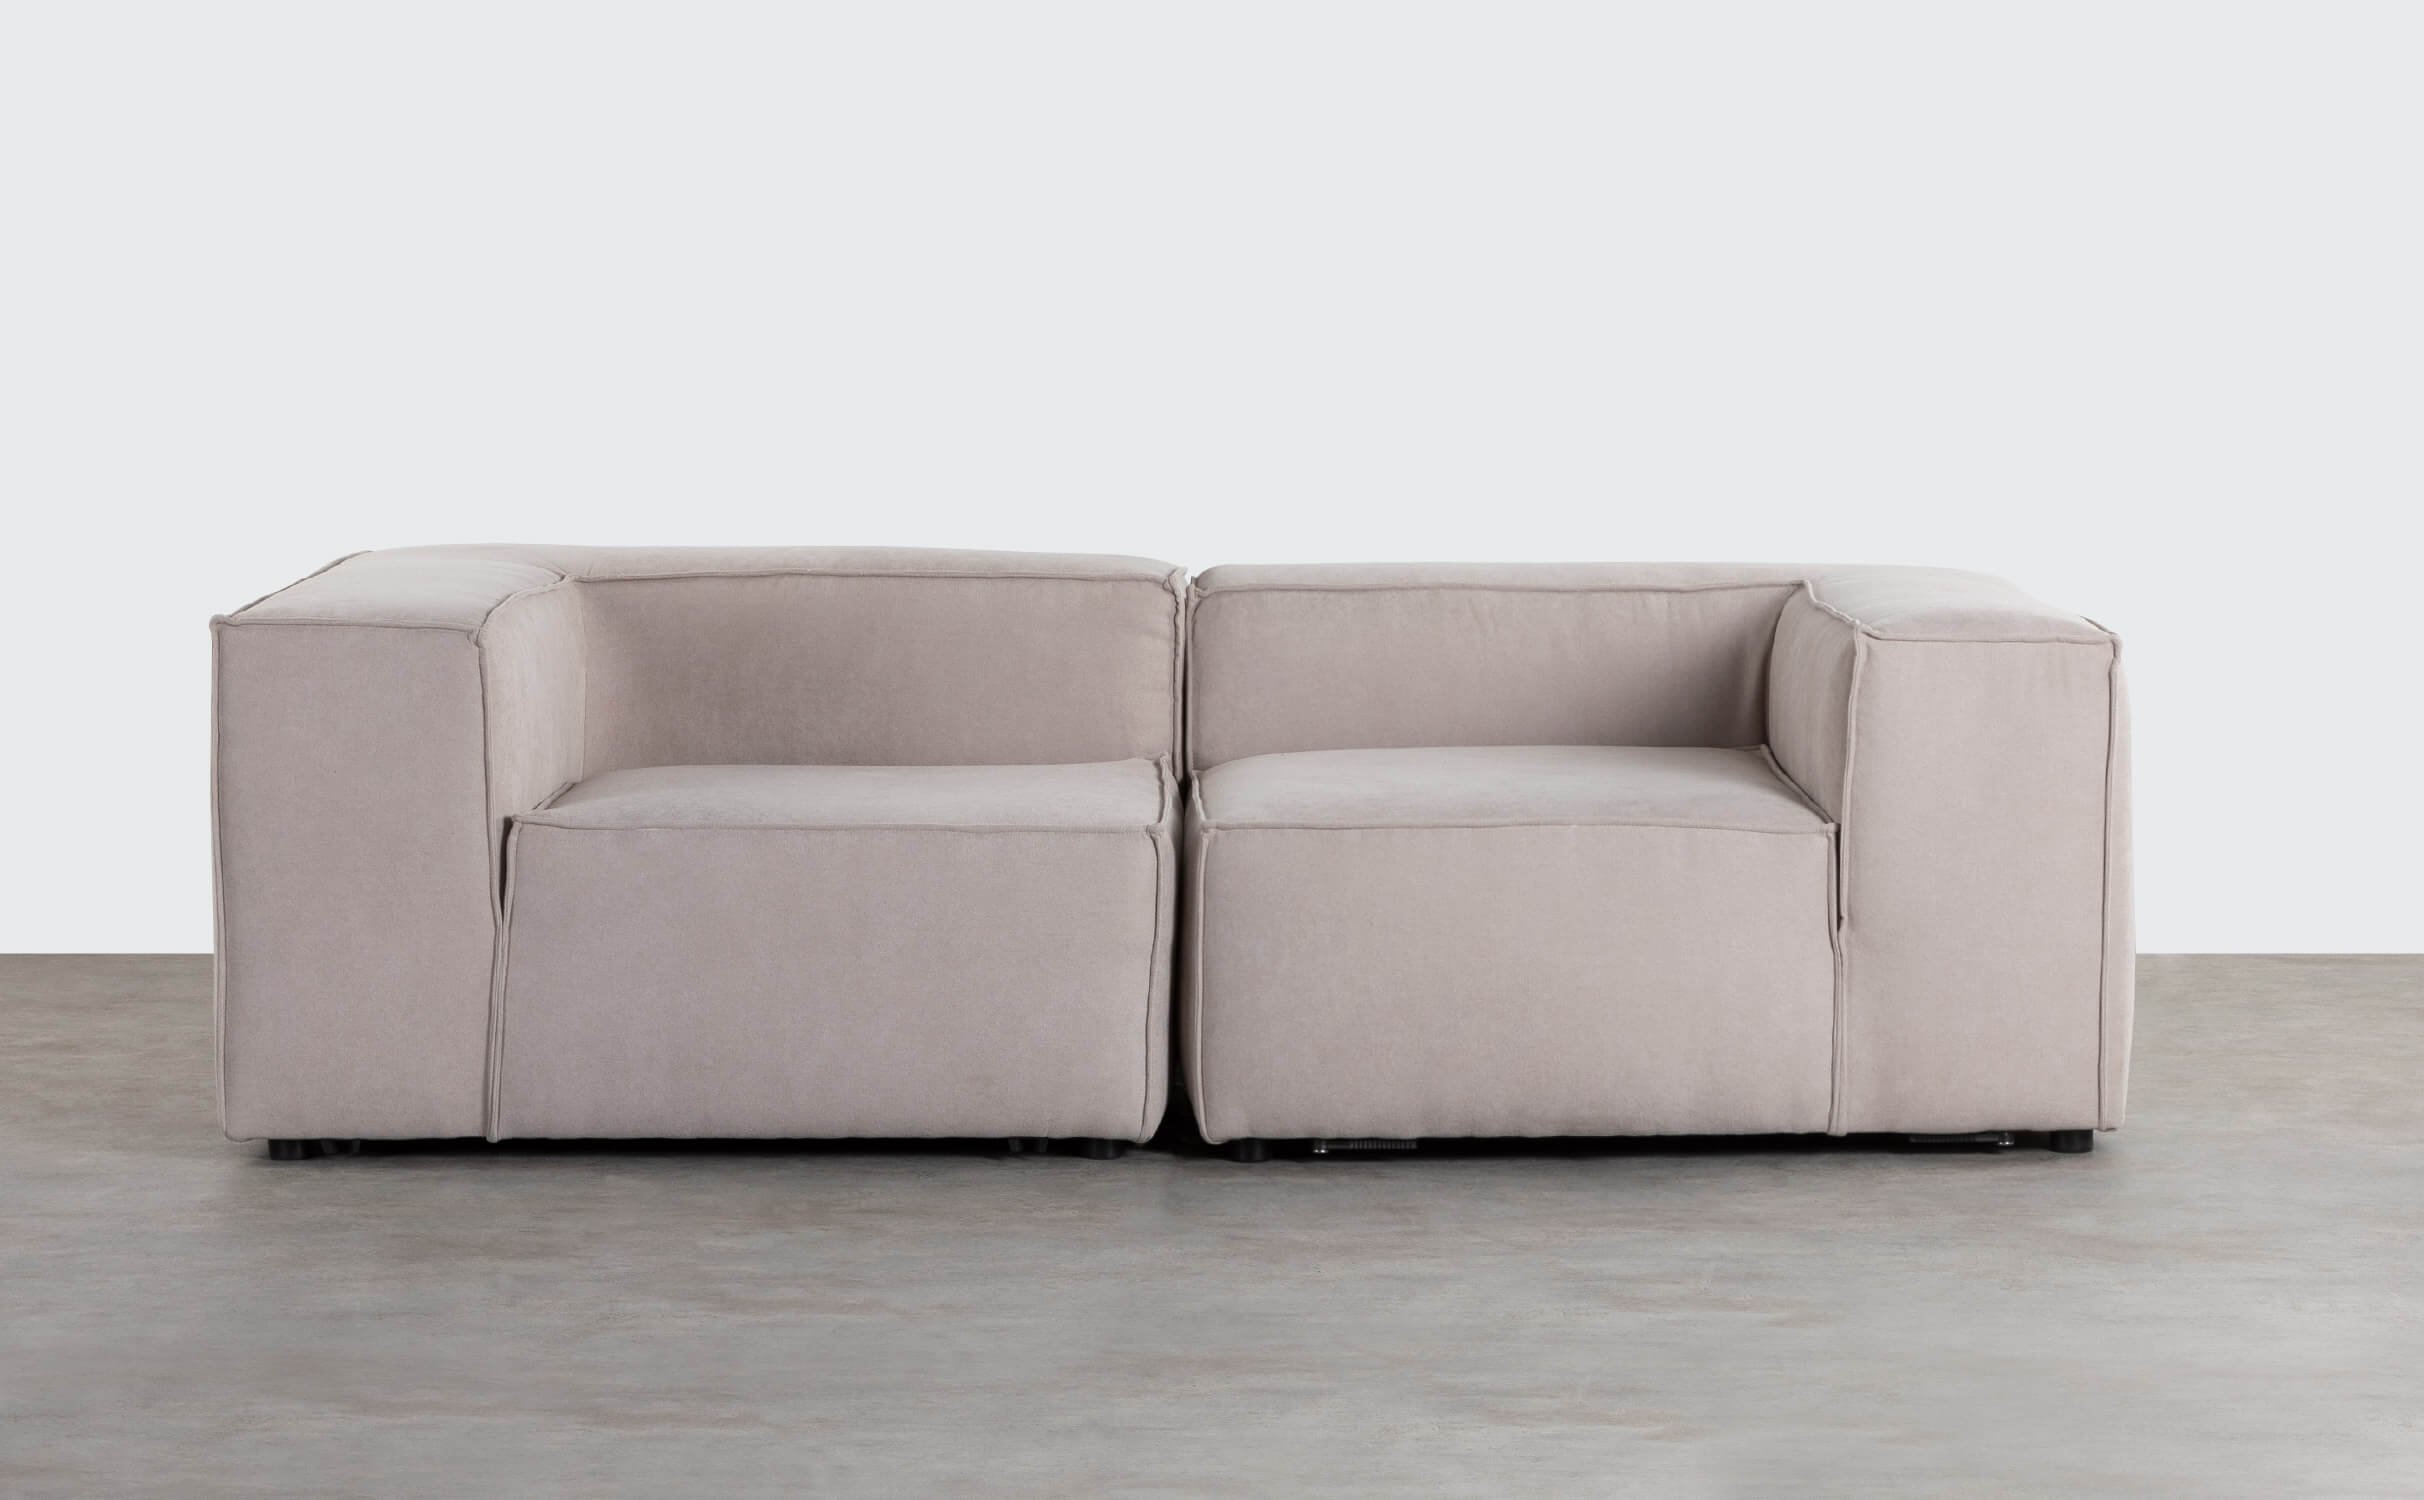 Jordan XL Modulares 2-teiliges Eck-Sofa aus Stoff, Galeriebild 1